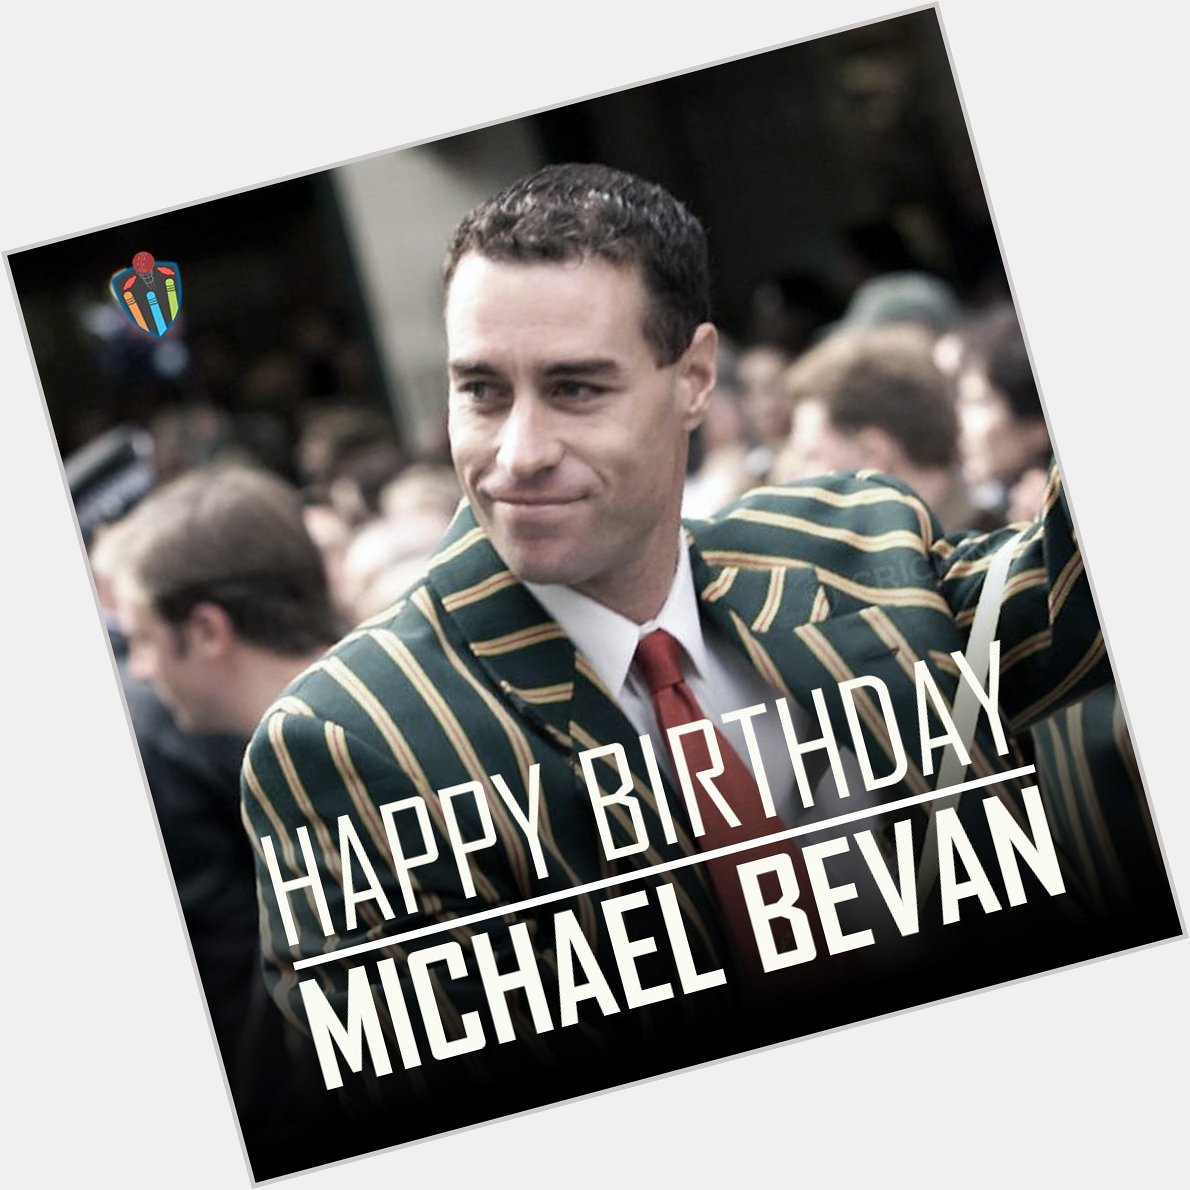 Happy Birthday Michael Bevan. The former Australian cricketer turns 47 today. 